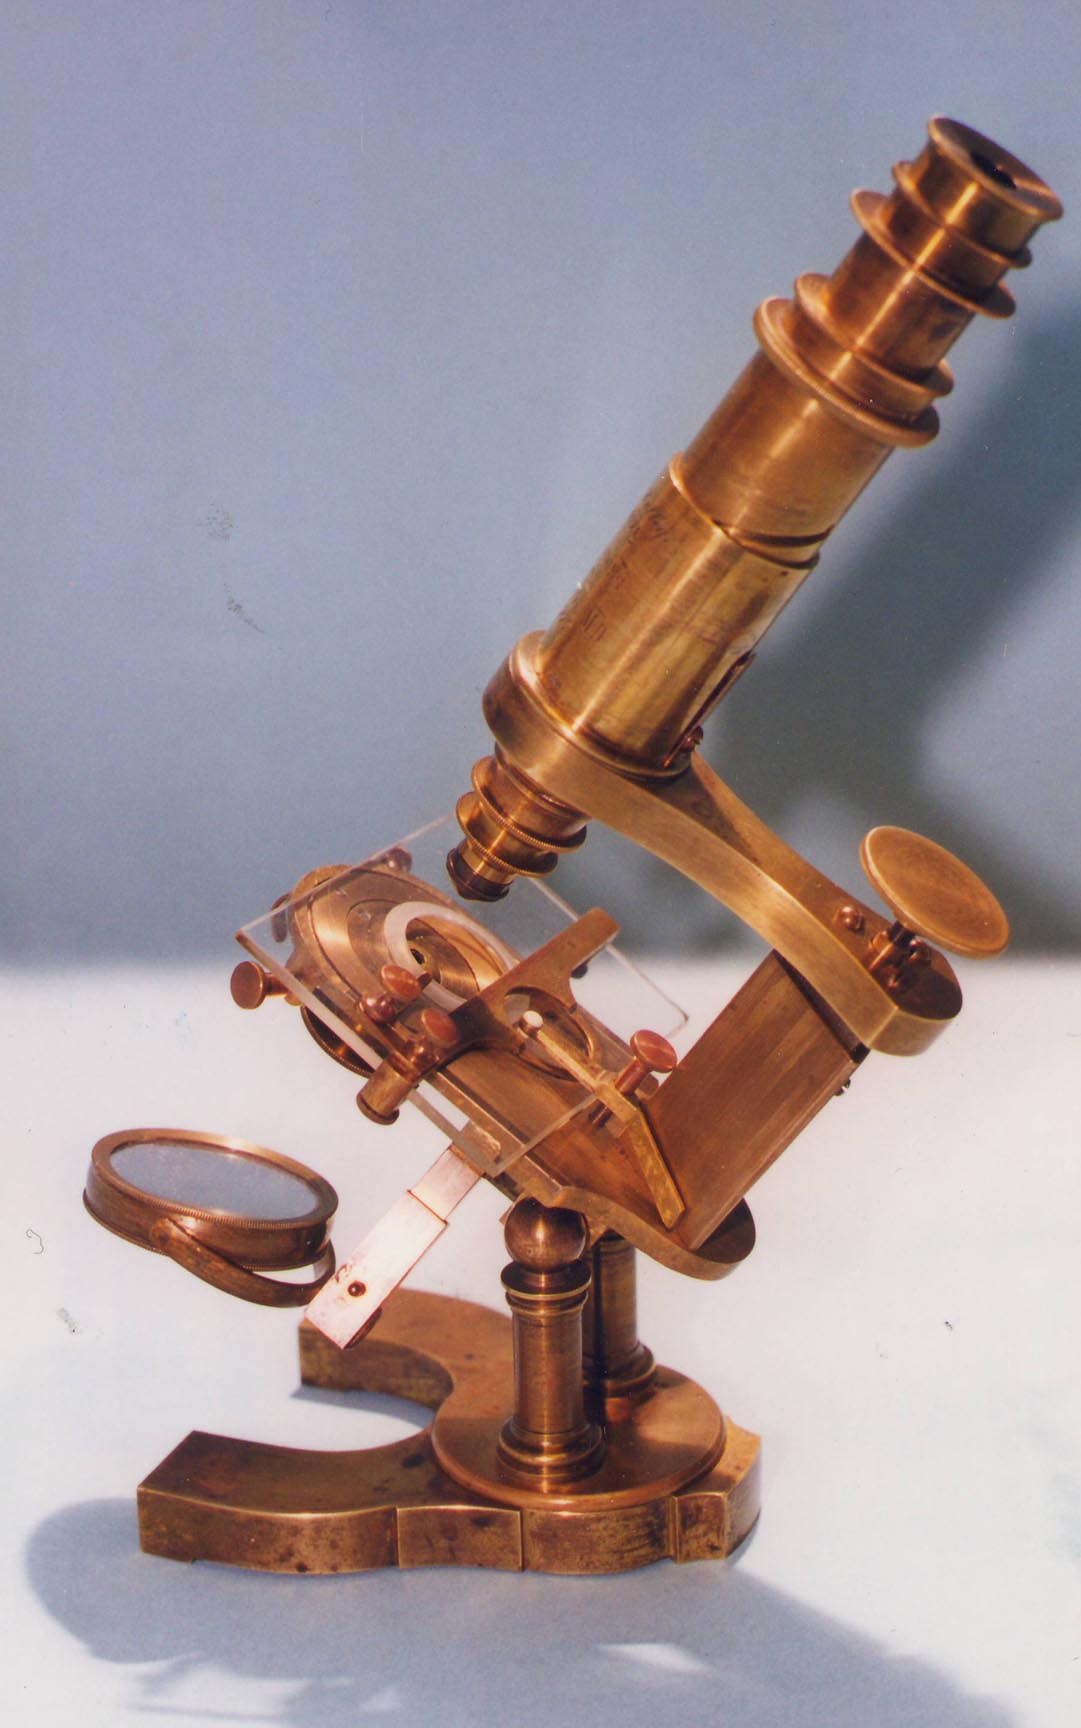 Wale Prize Microscope